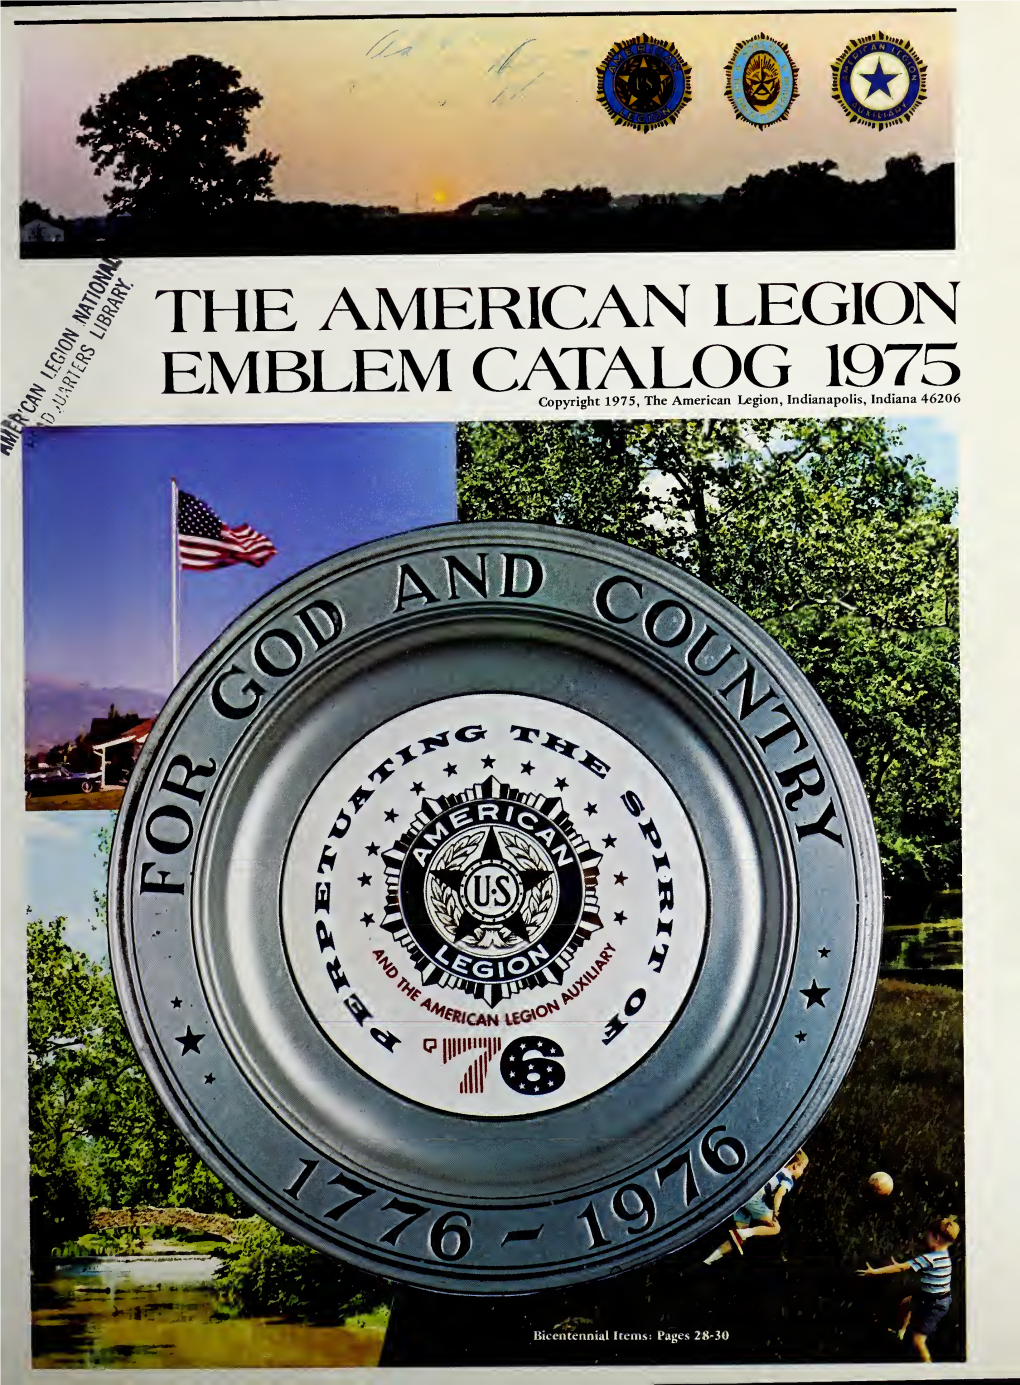 The American Legion Emblem Catalog, 1975